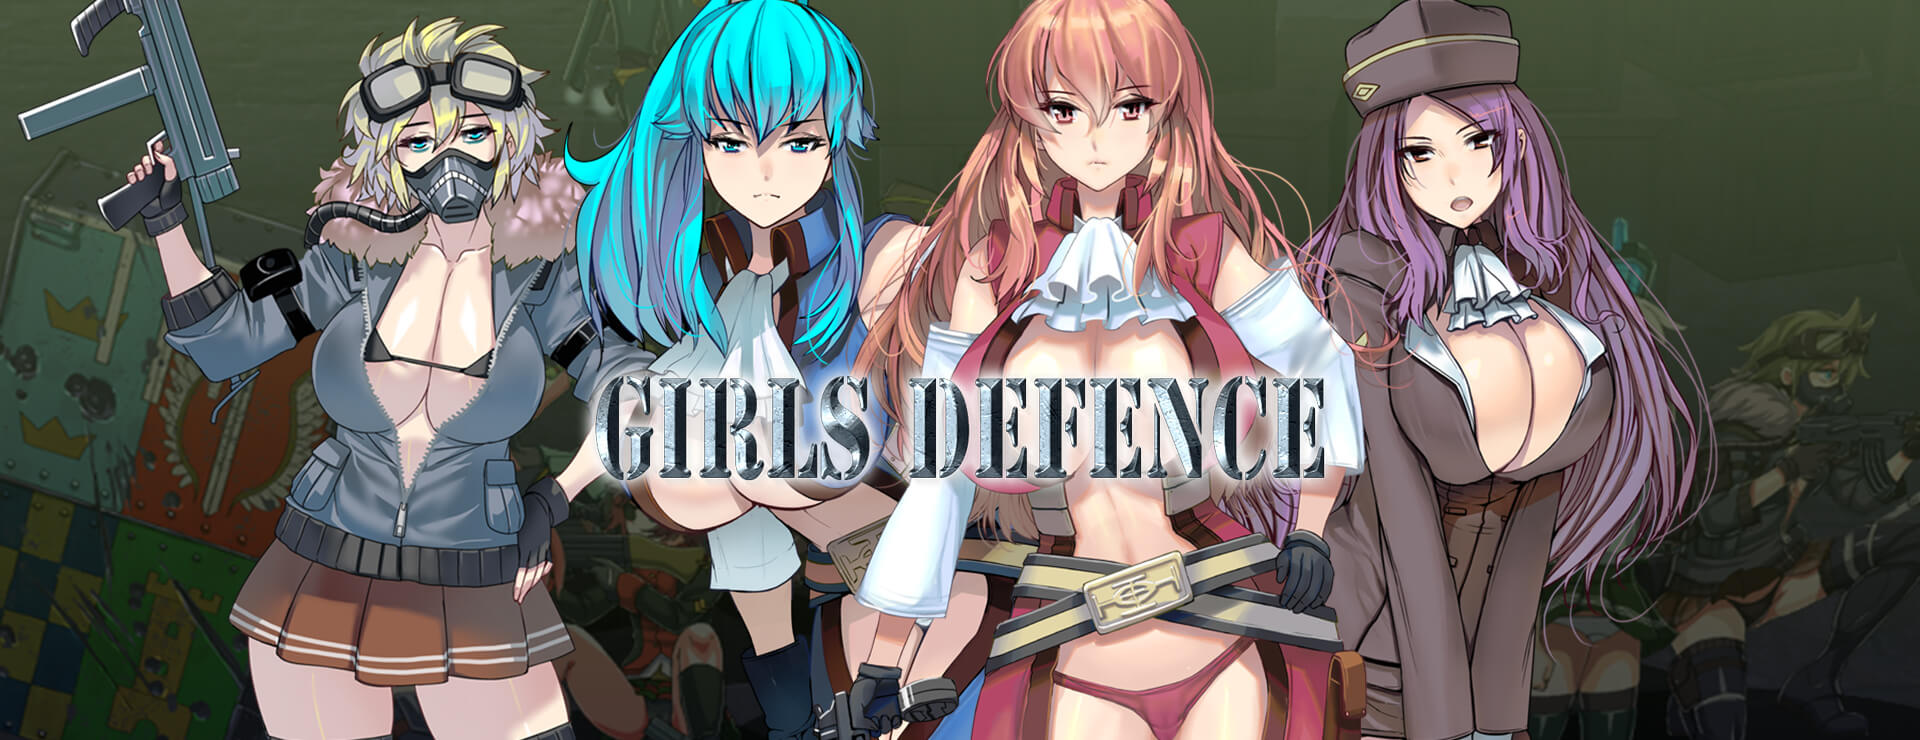 Girls Defence - アクションアドベンチャー ゲーム